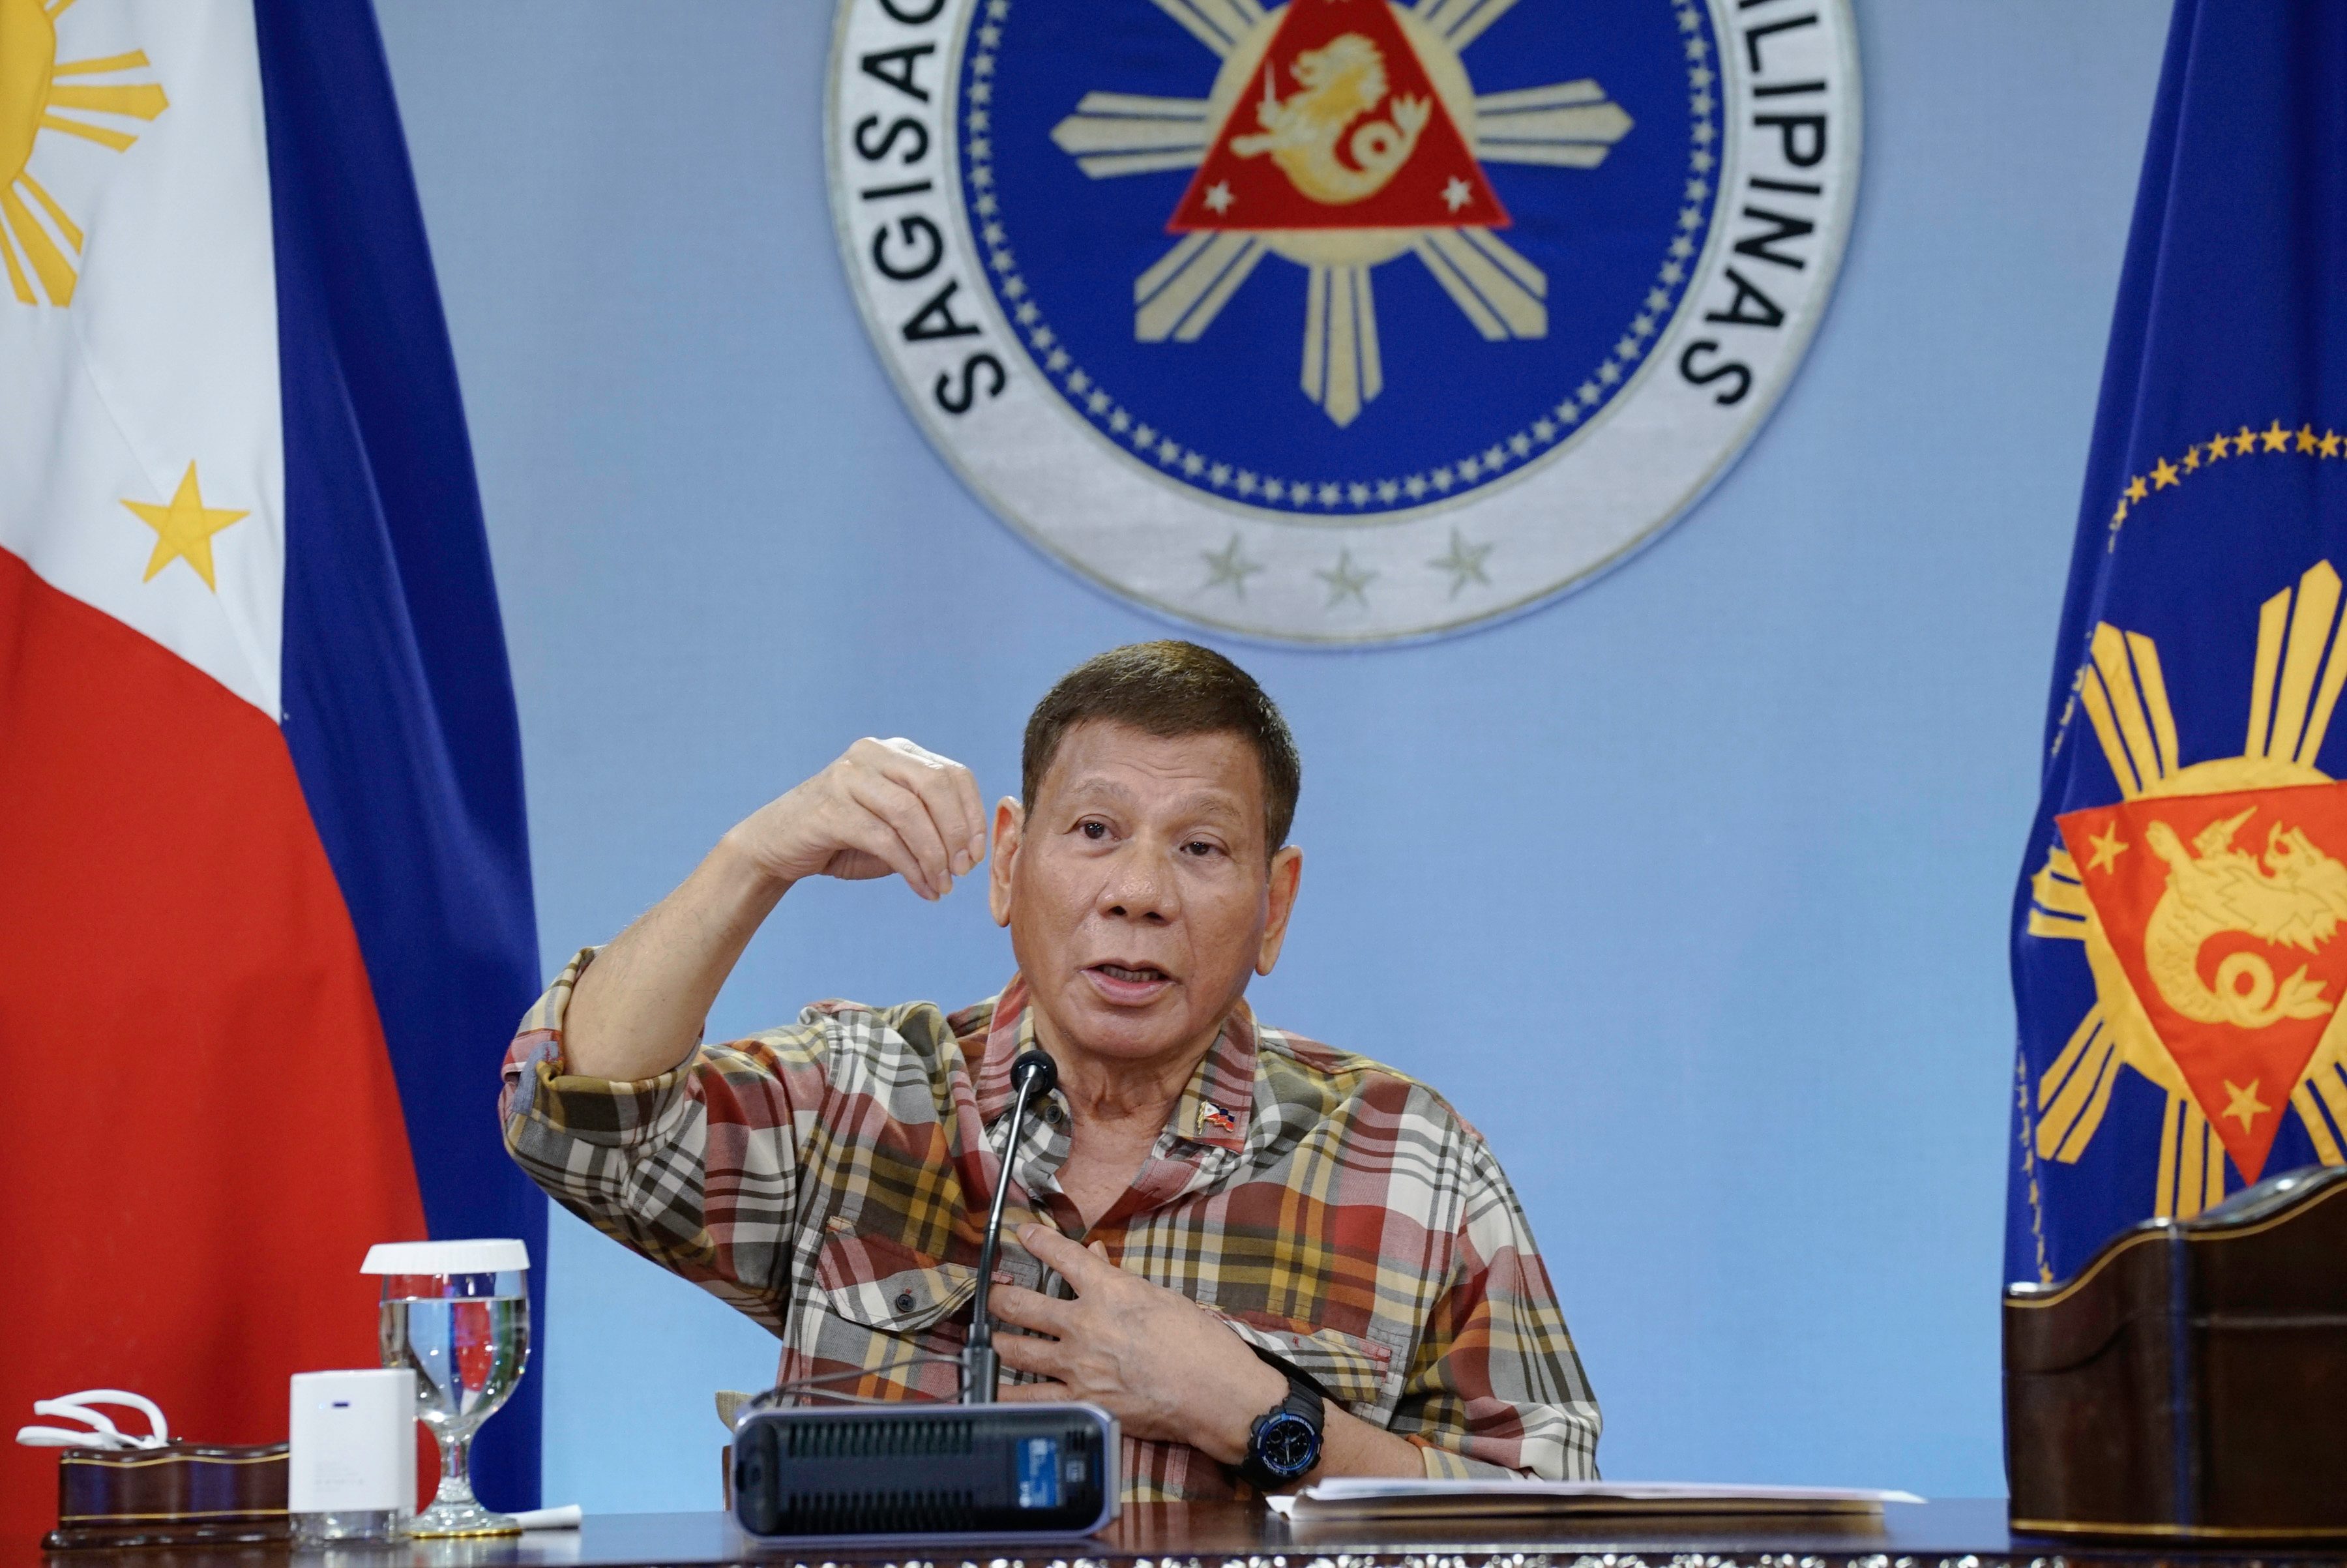 Duterte belittles Hague ruling: ‘I’ll throw it in waste basket’